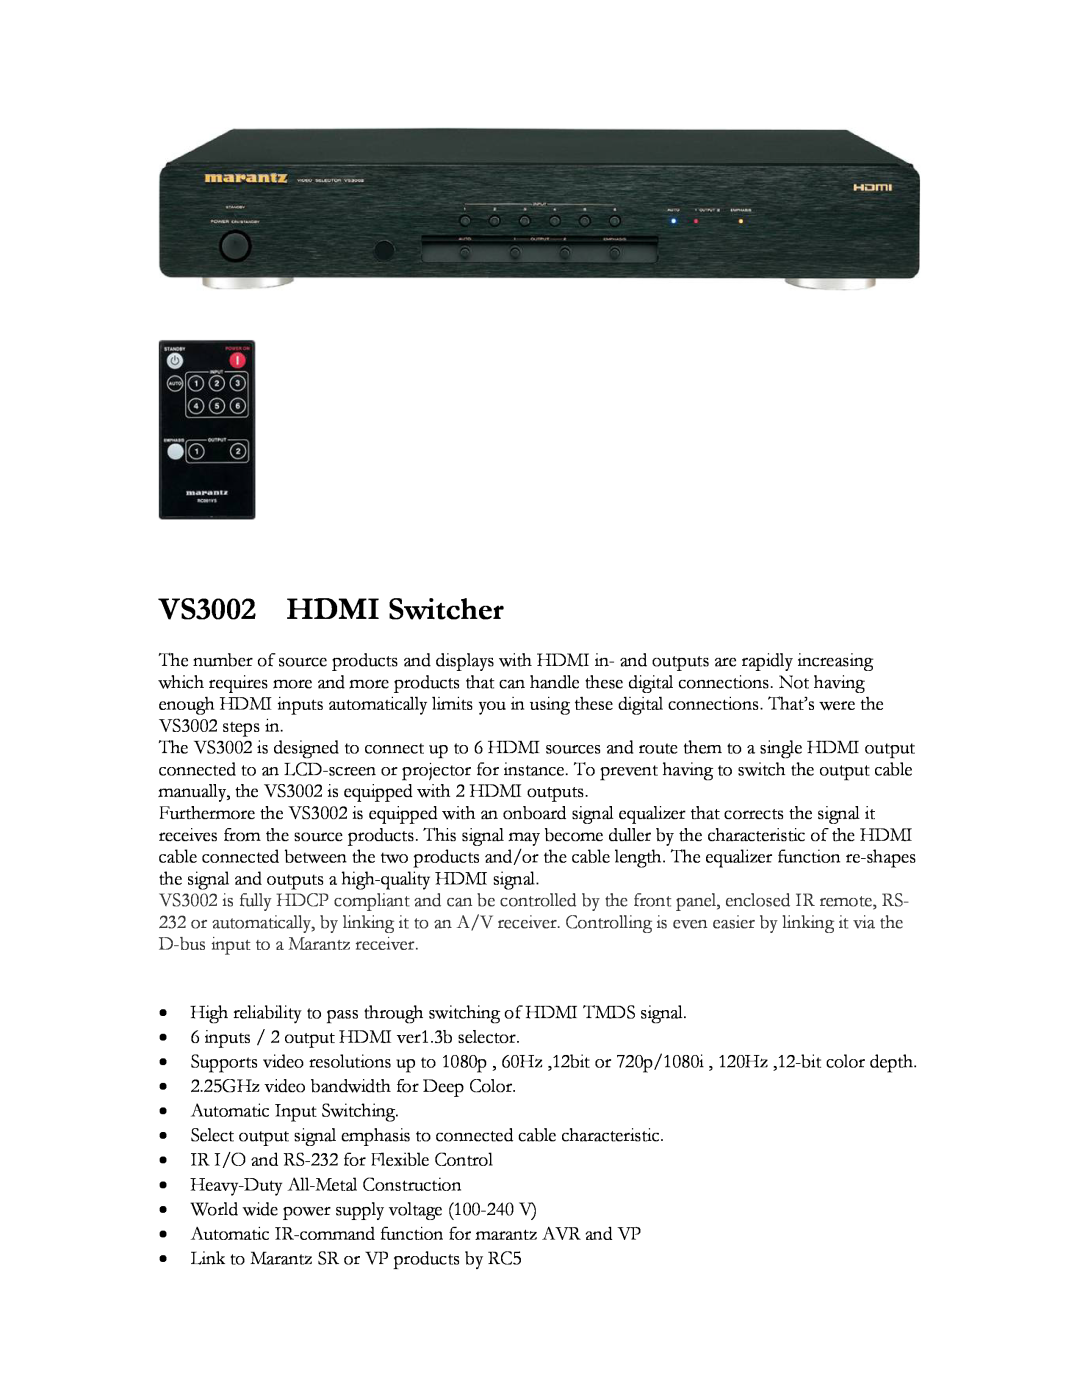 Marantz manual VS3002 HDMI Switcher 